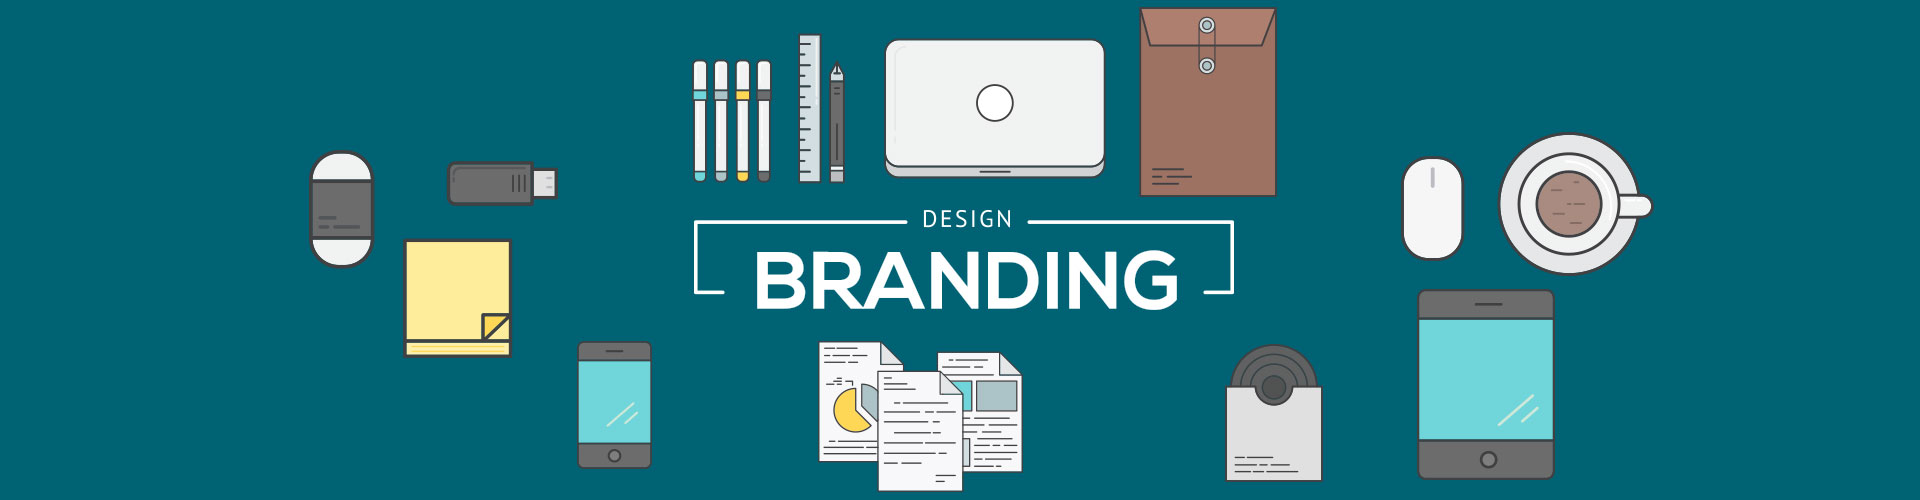 Branding and Design 